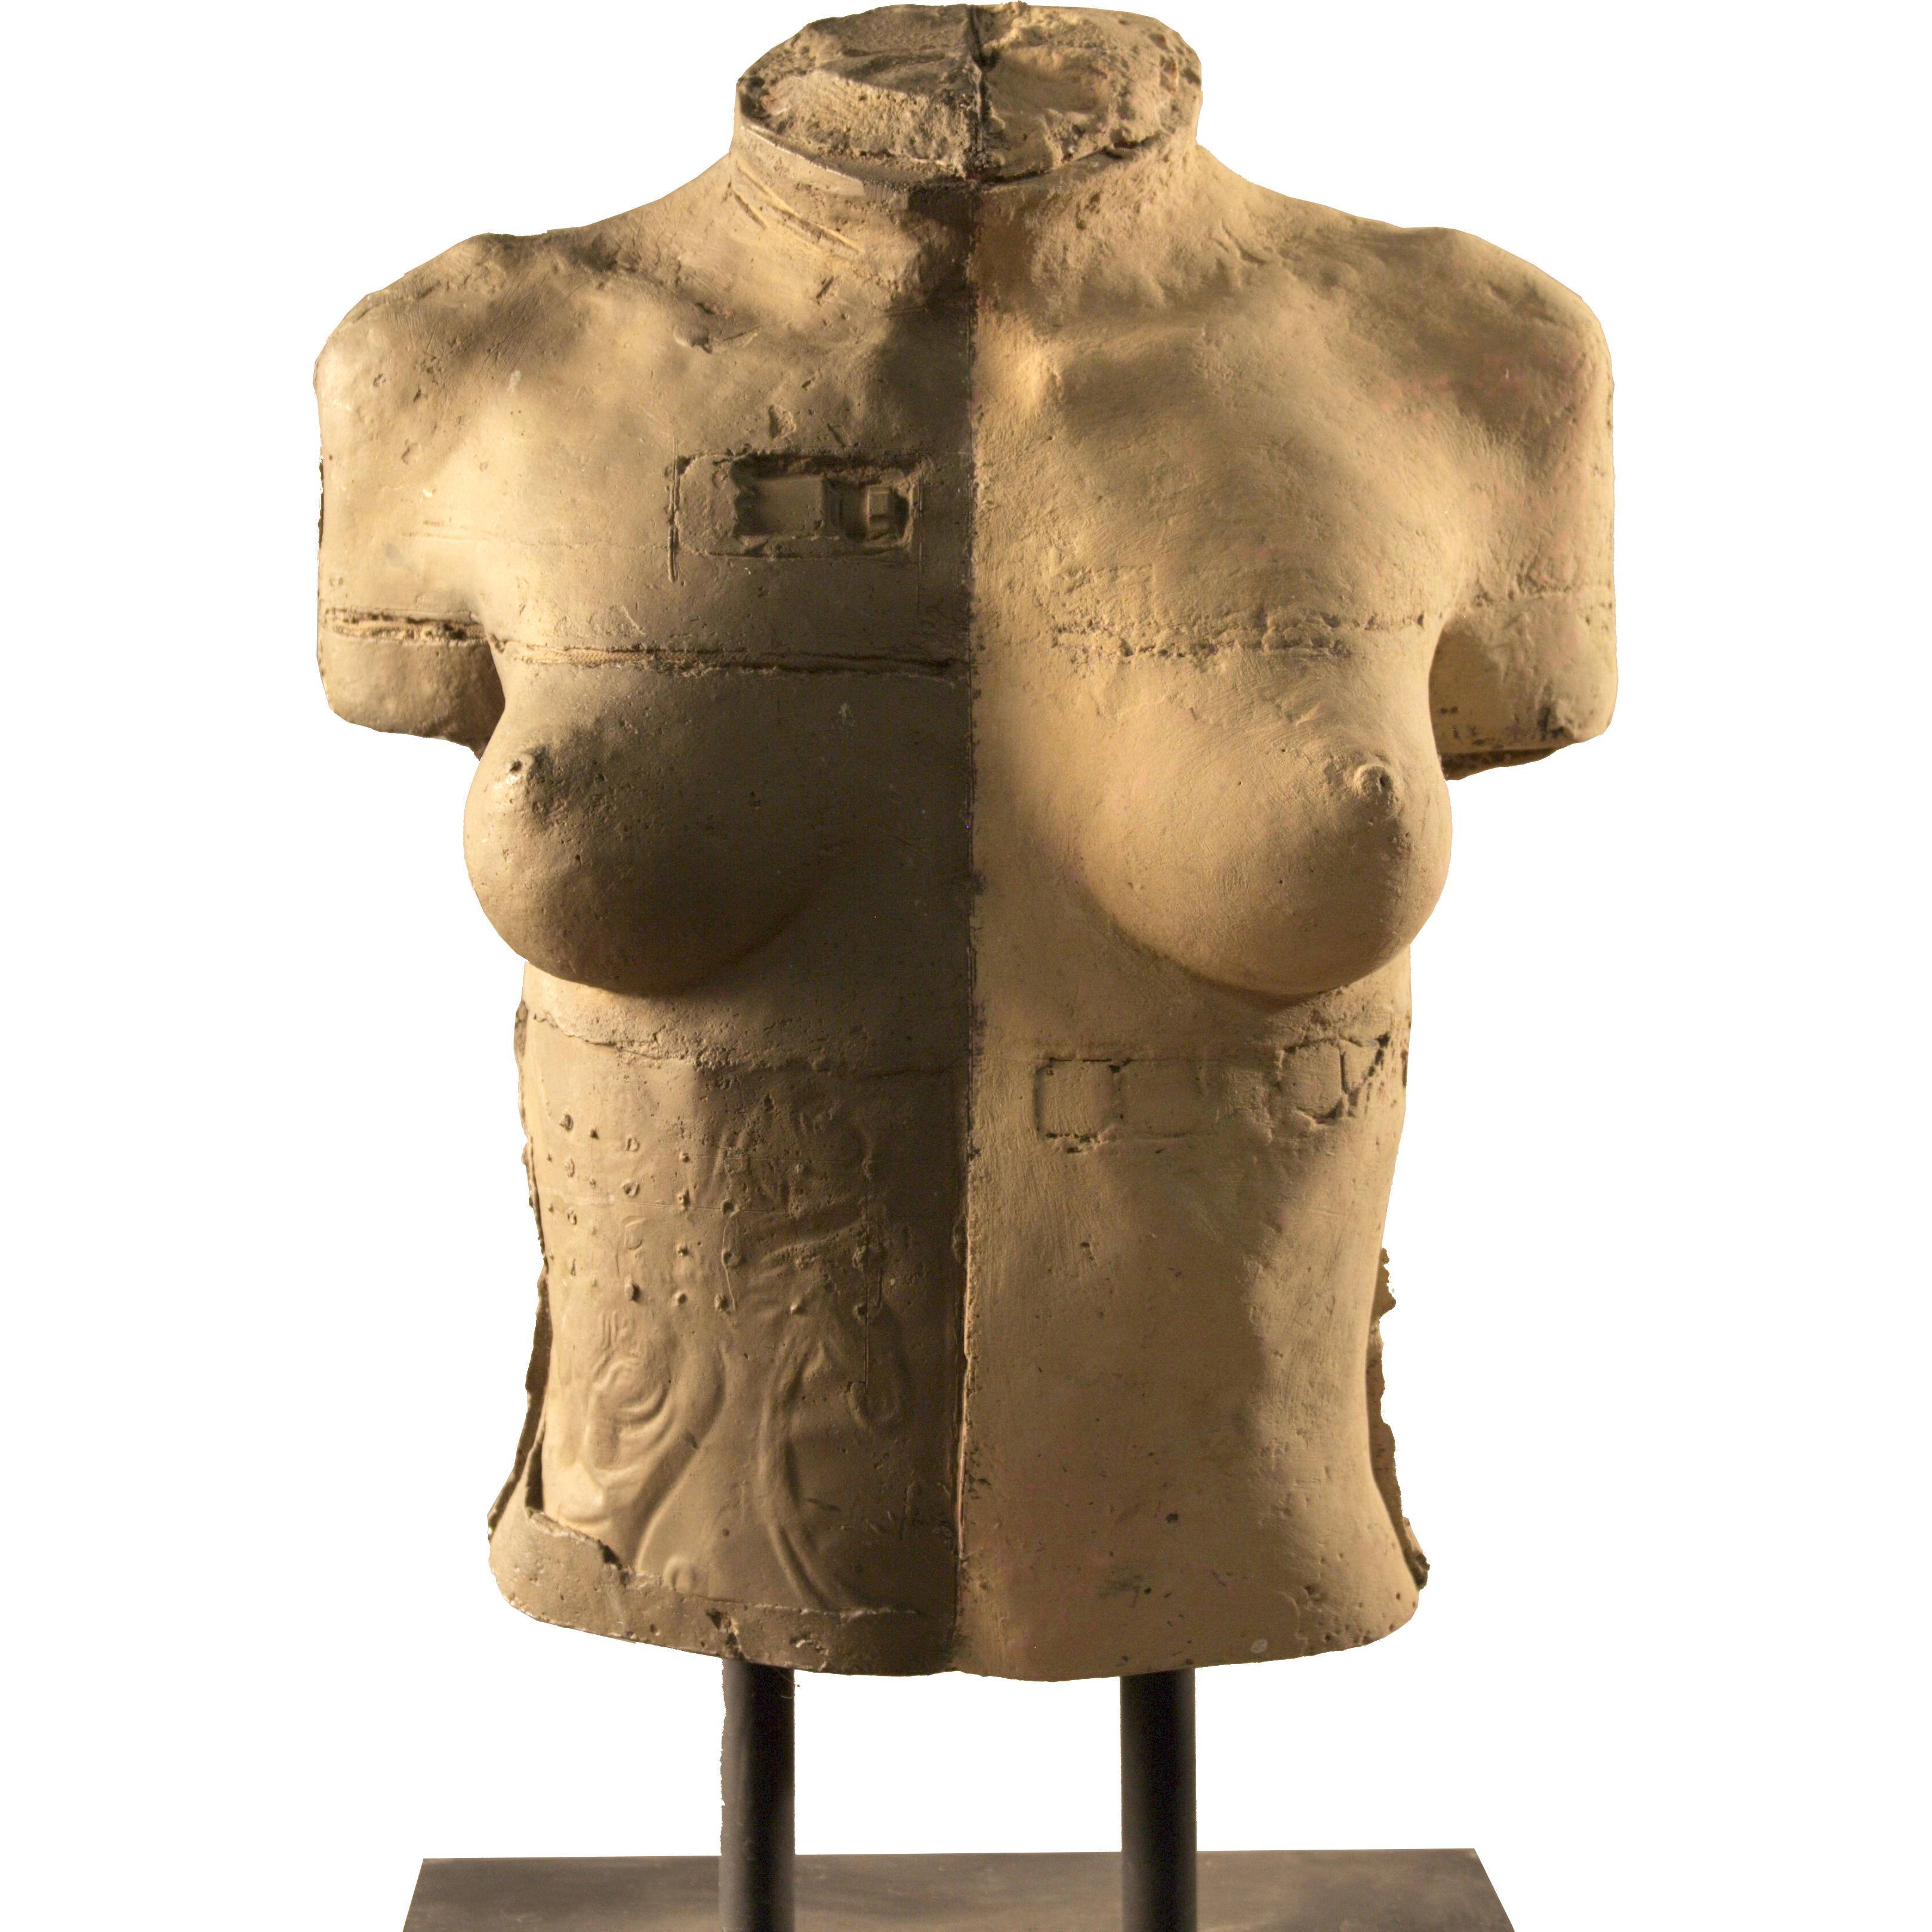 Dan Corbin Nude Sculpture – Erwähnungen des Künstlers